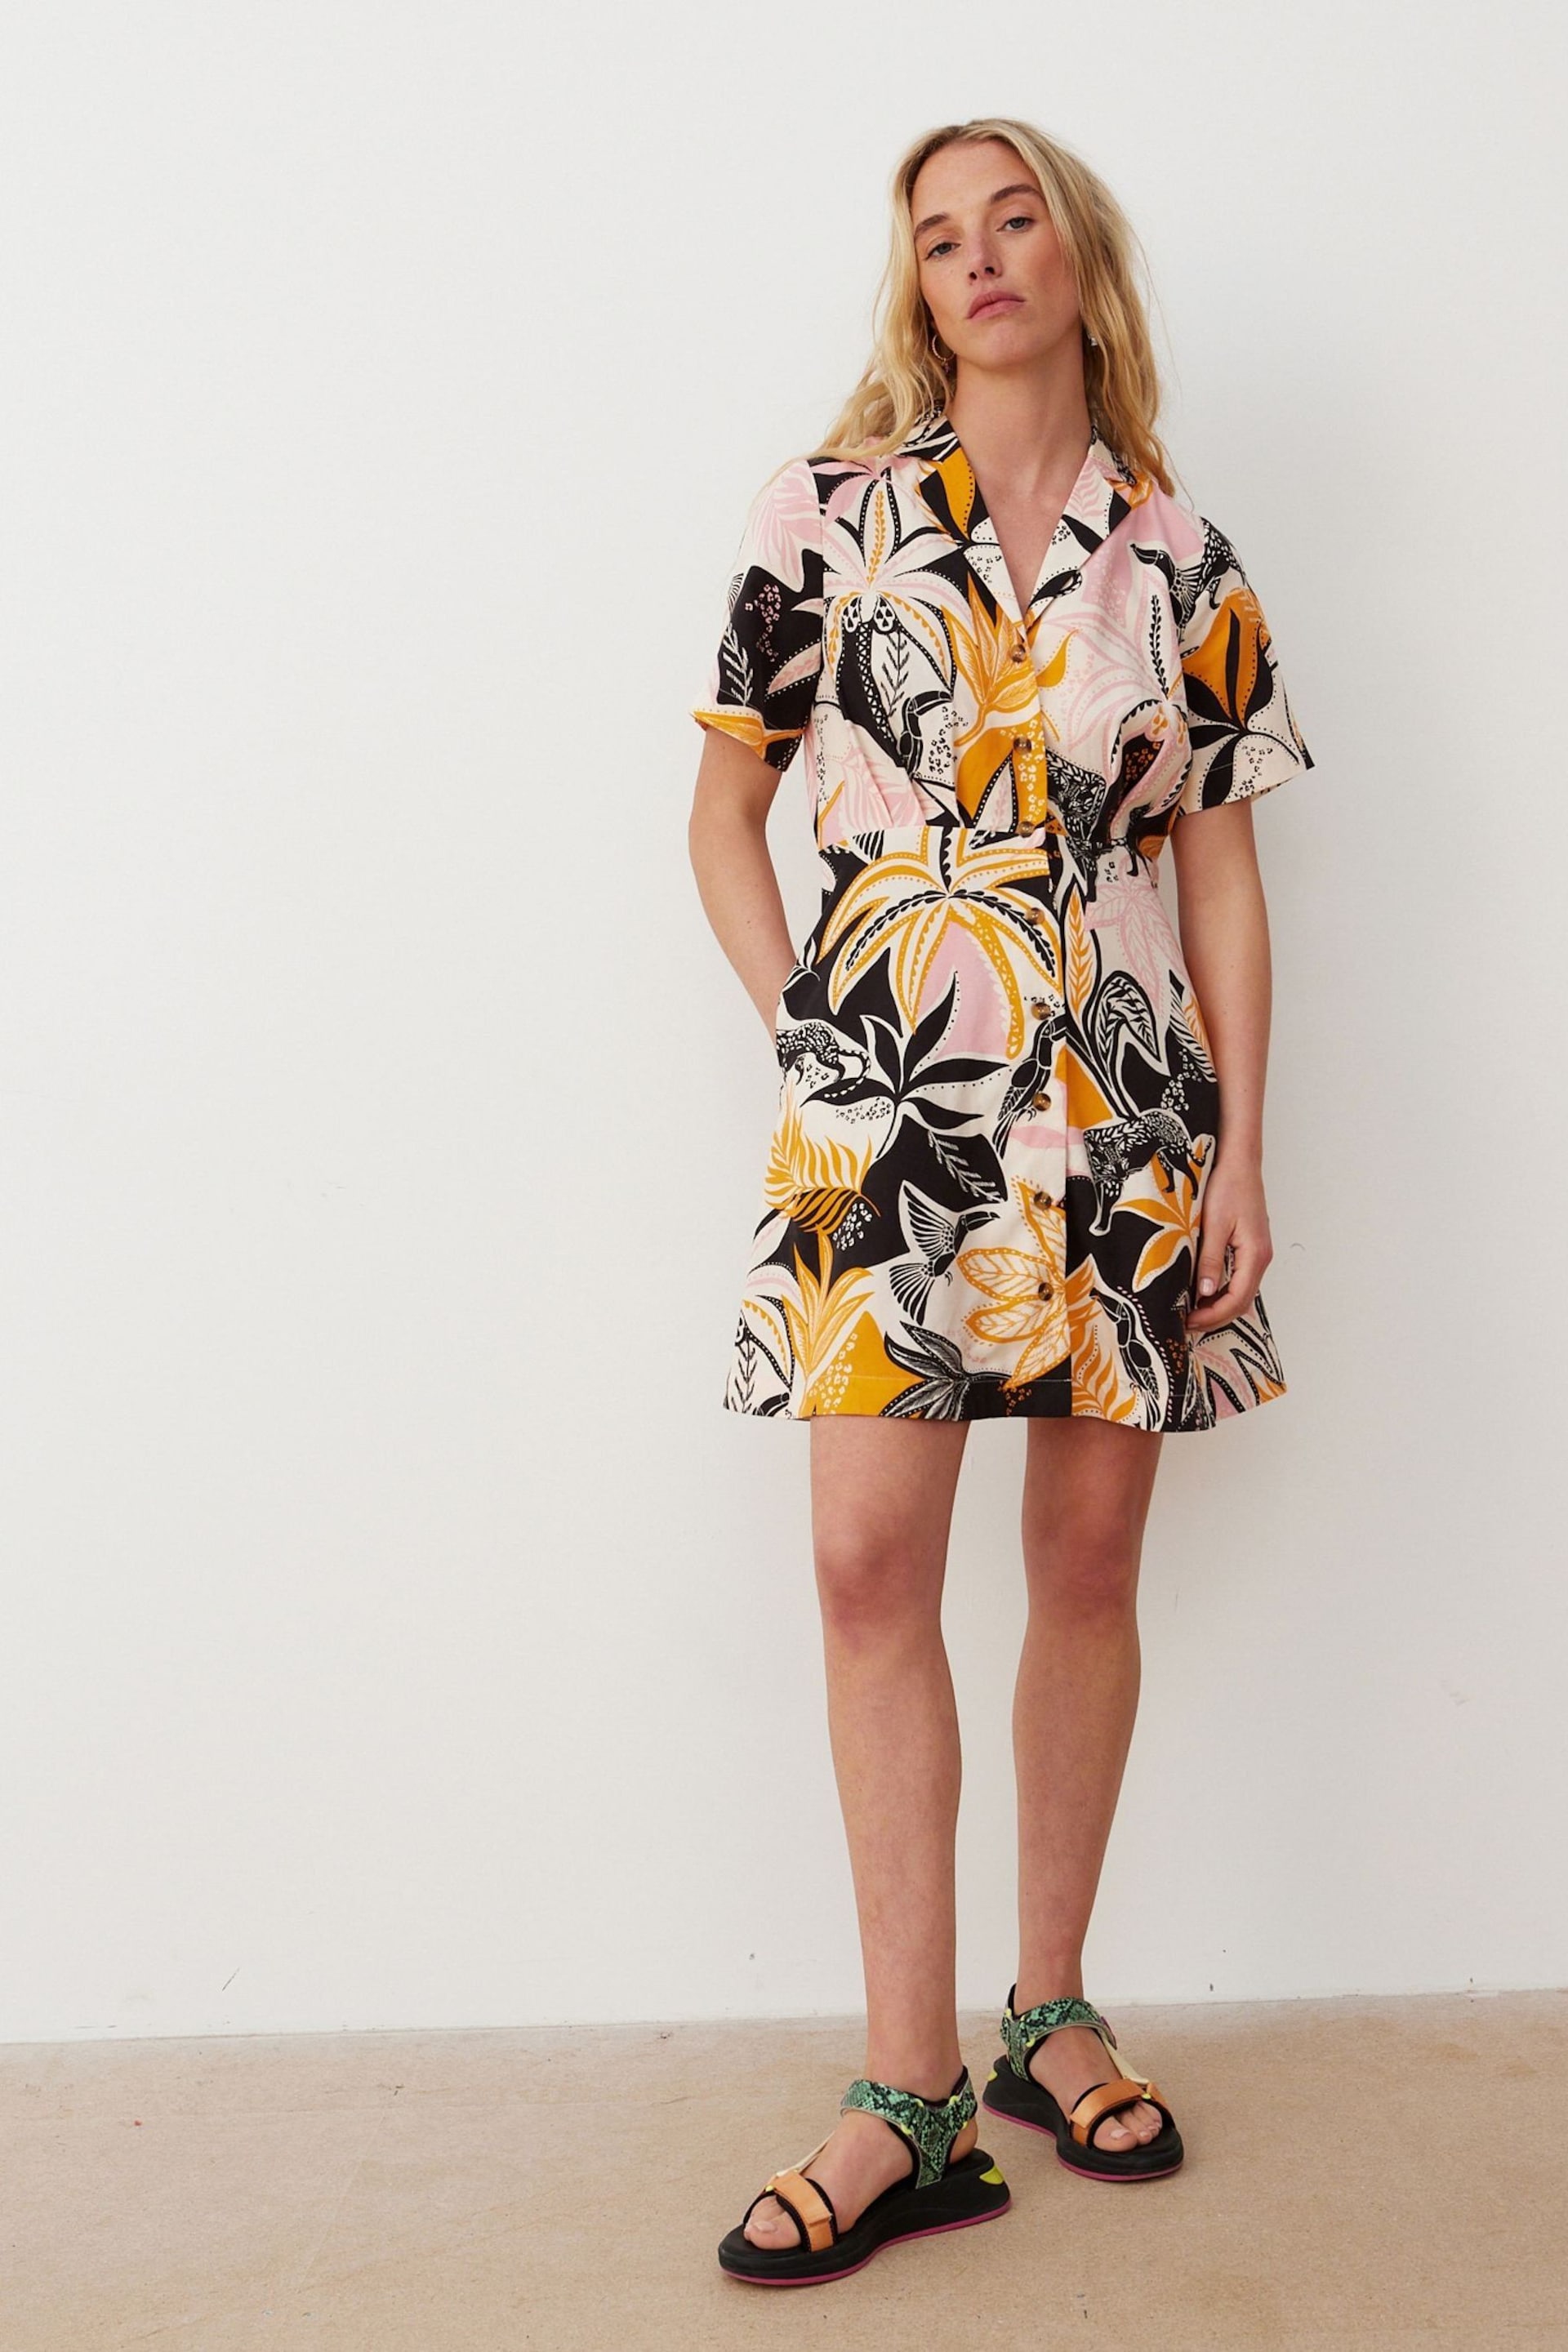 Oliver Bonas Pink/Orange Tropical Print Mini Shirt Dress - Image 2 of 8